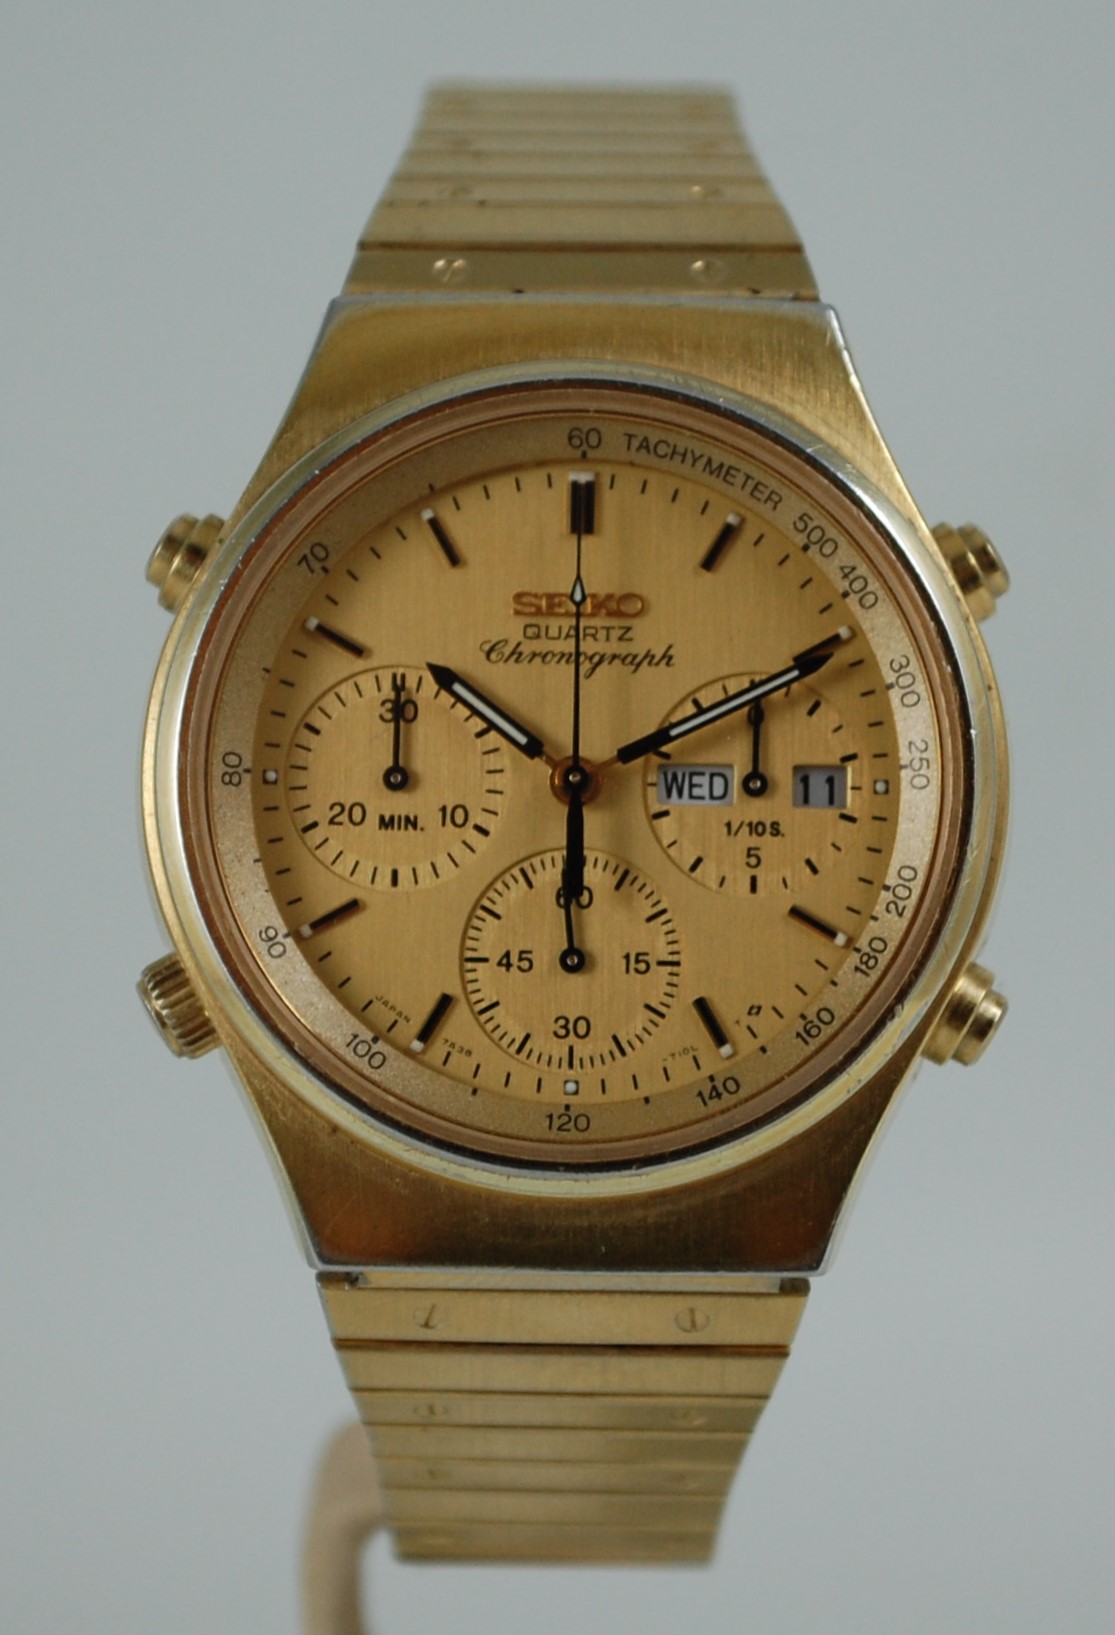 SOLD 1986 Seiko 7A38-7190 Chronograph - Birth Year Watches